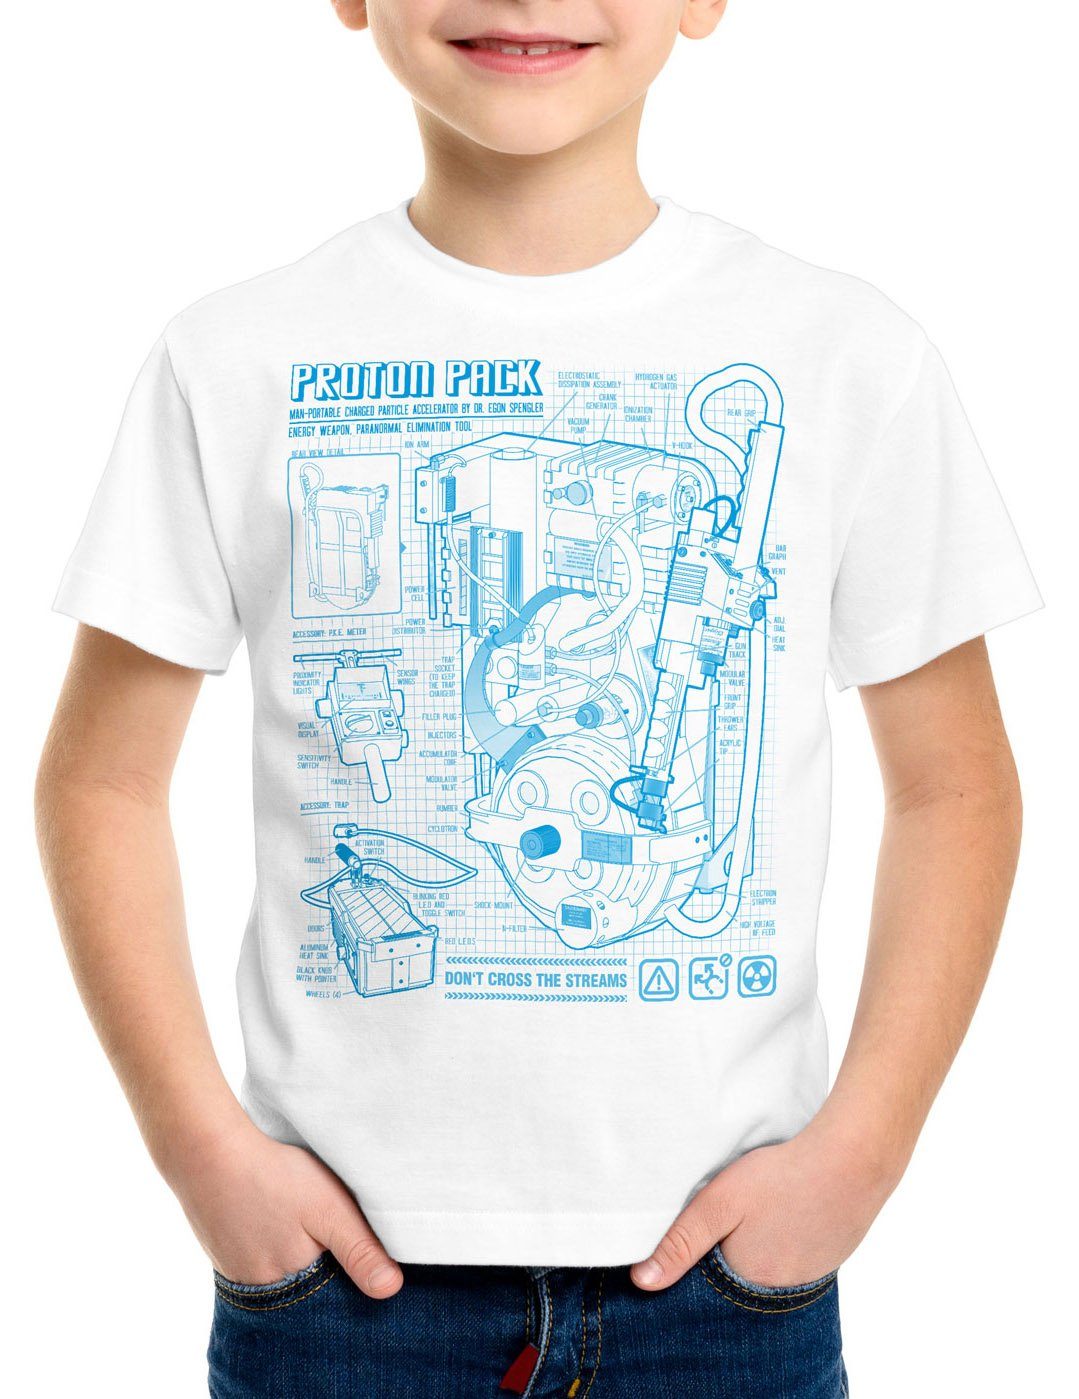 T-Shirt Kinder weiß Protonenstrahler Blaupause style3 pack proton Geisterjäger Print-Shirt